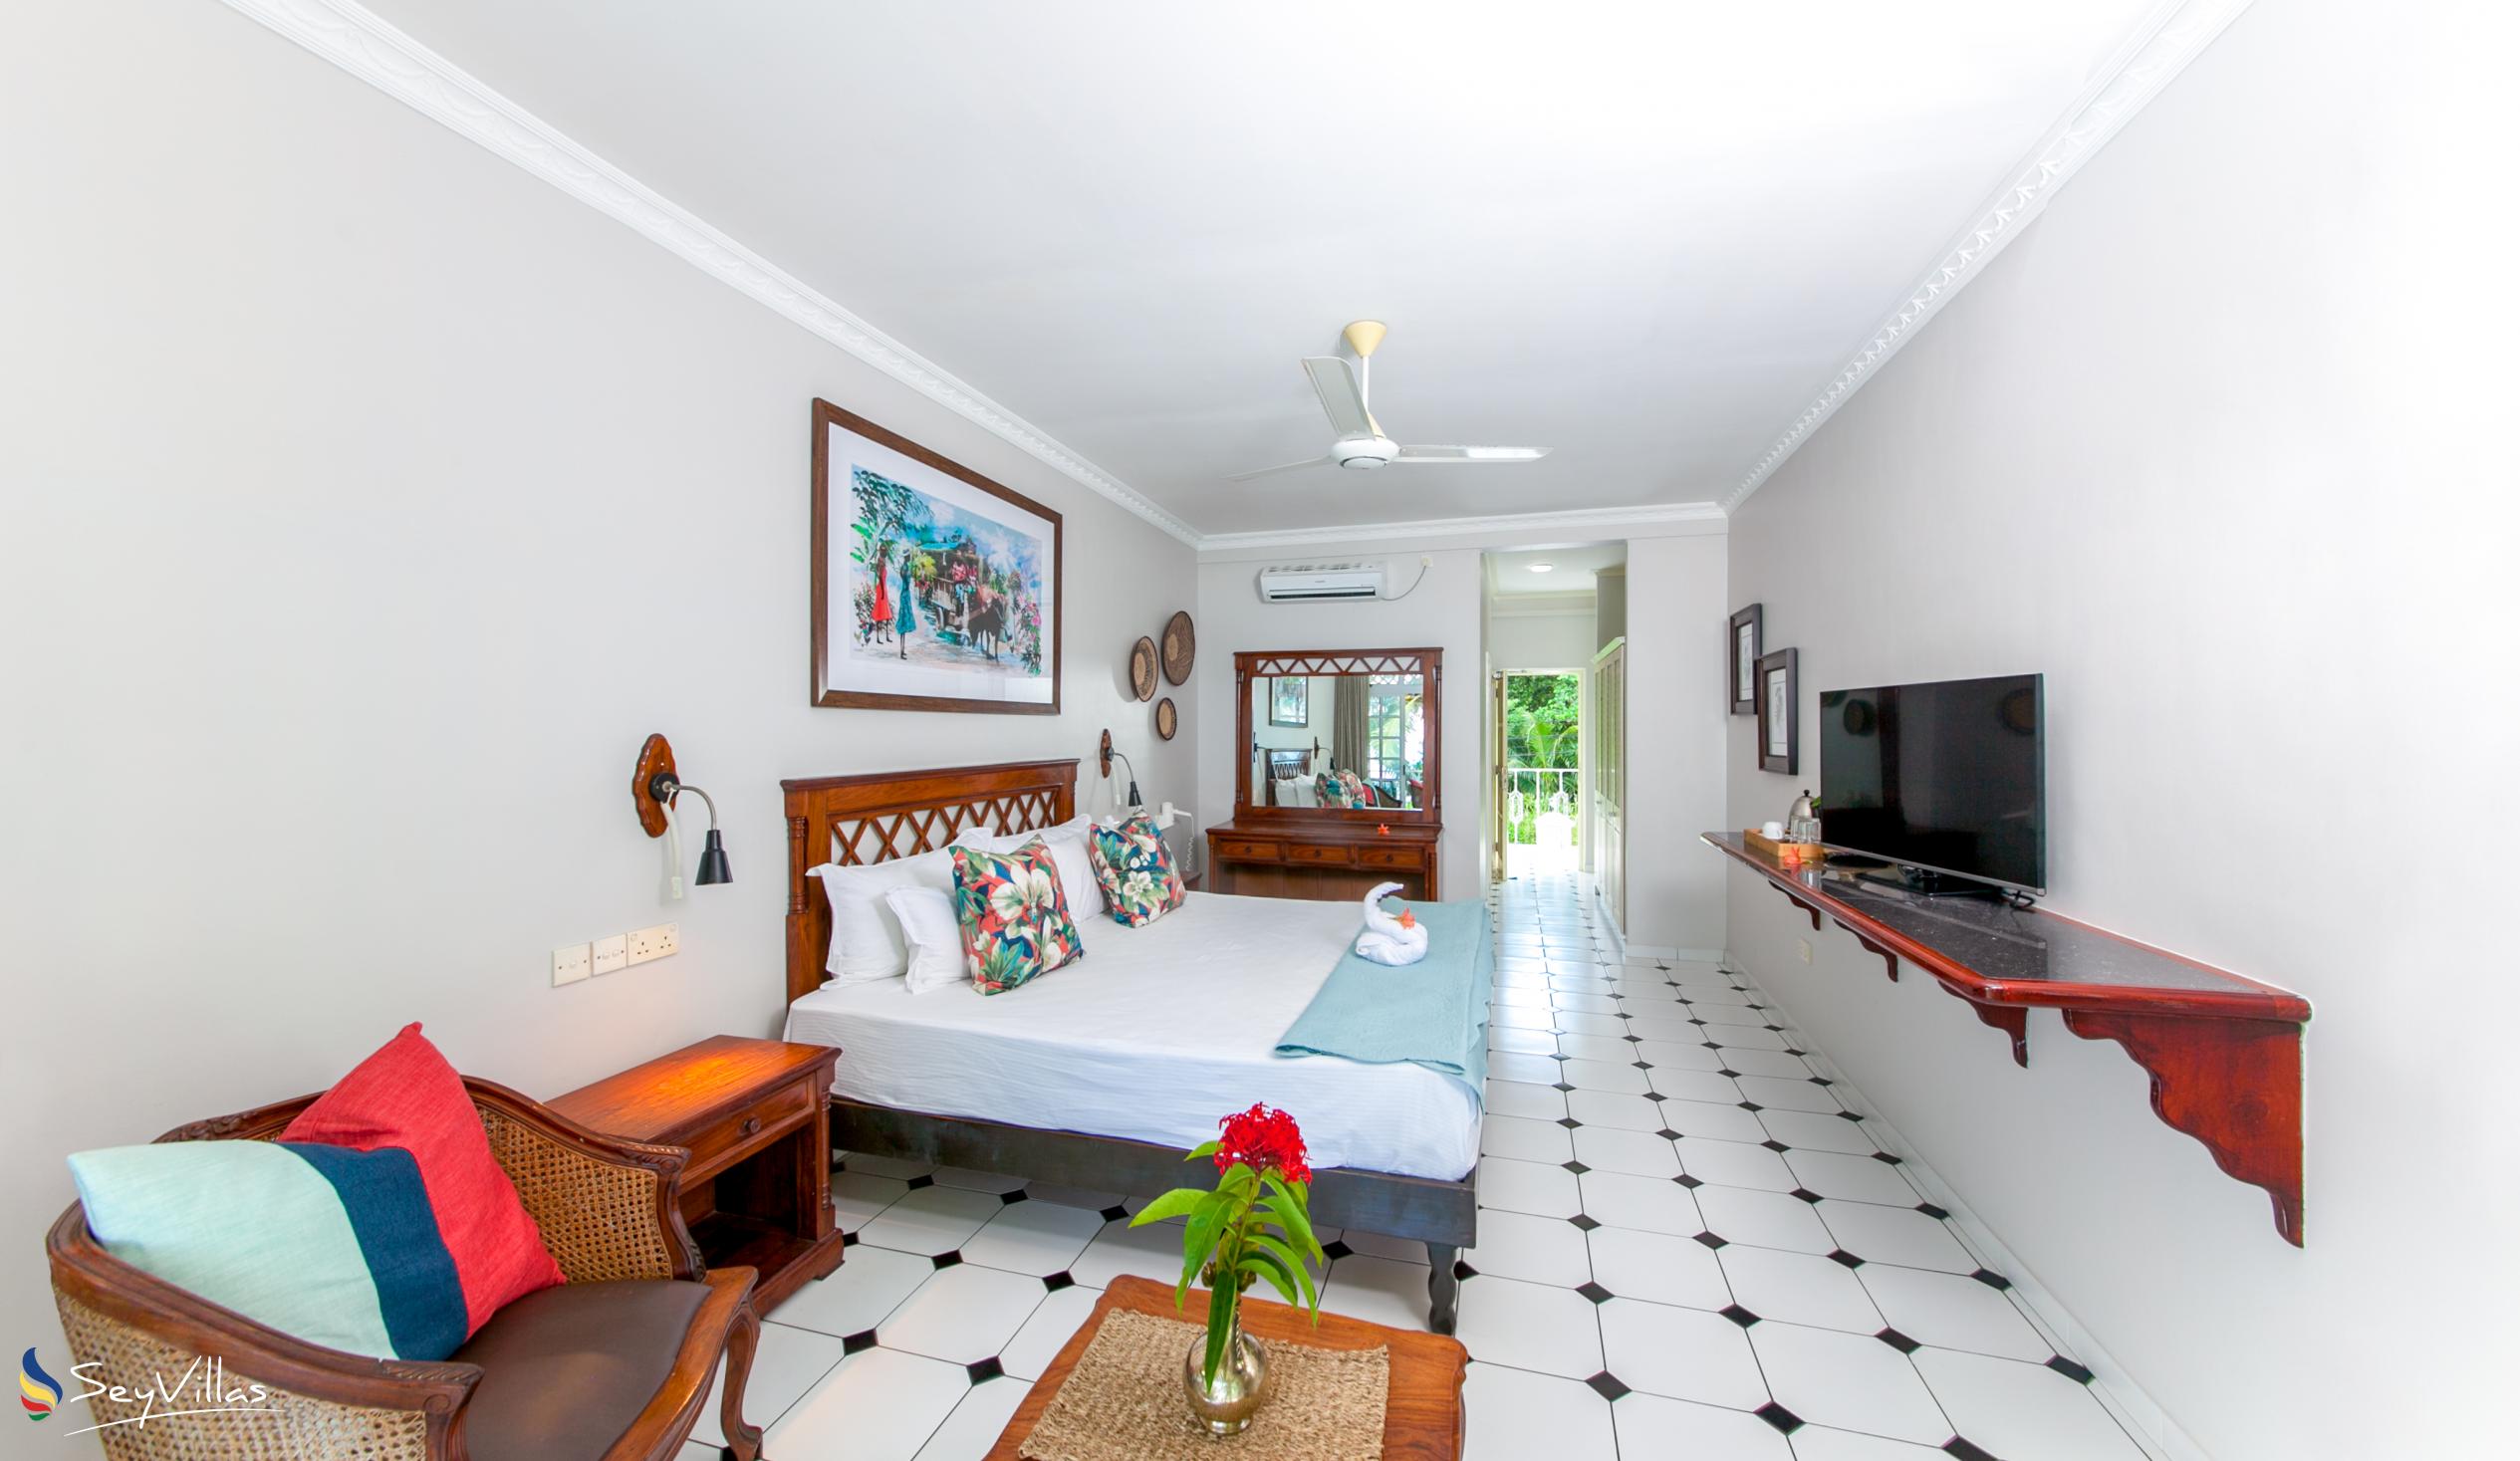 Photo 61: Palm Beach Hotel - Standard Room - Praslin (Seychelles)